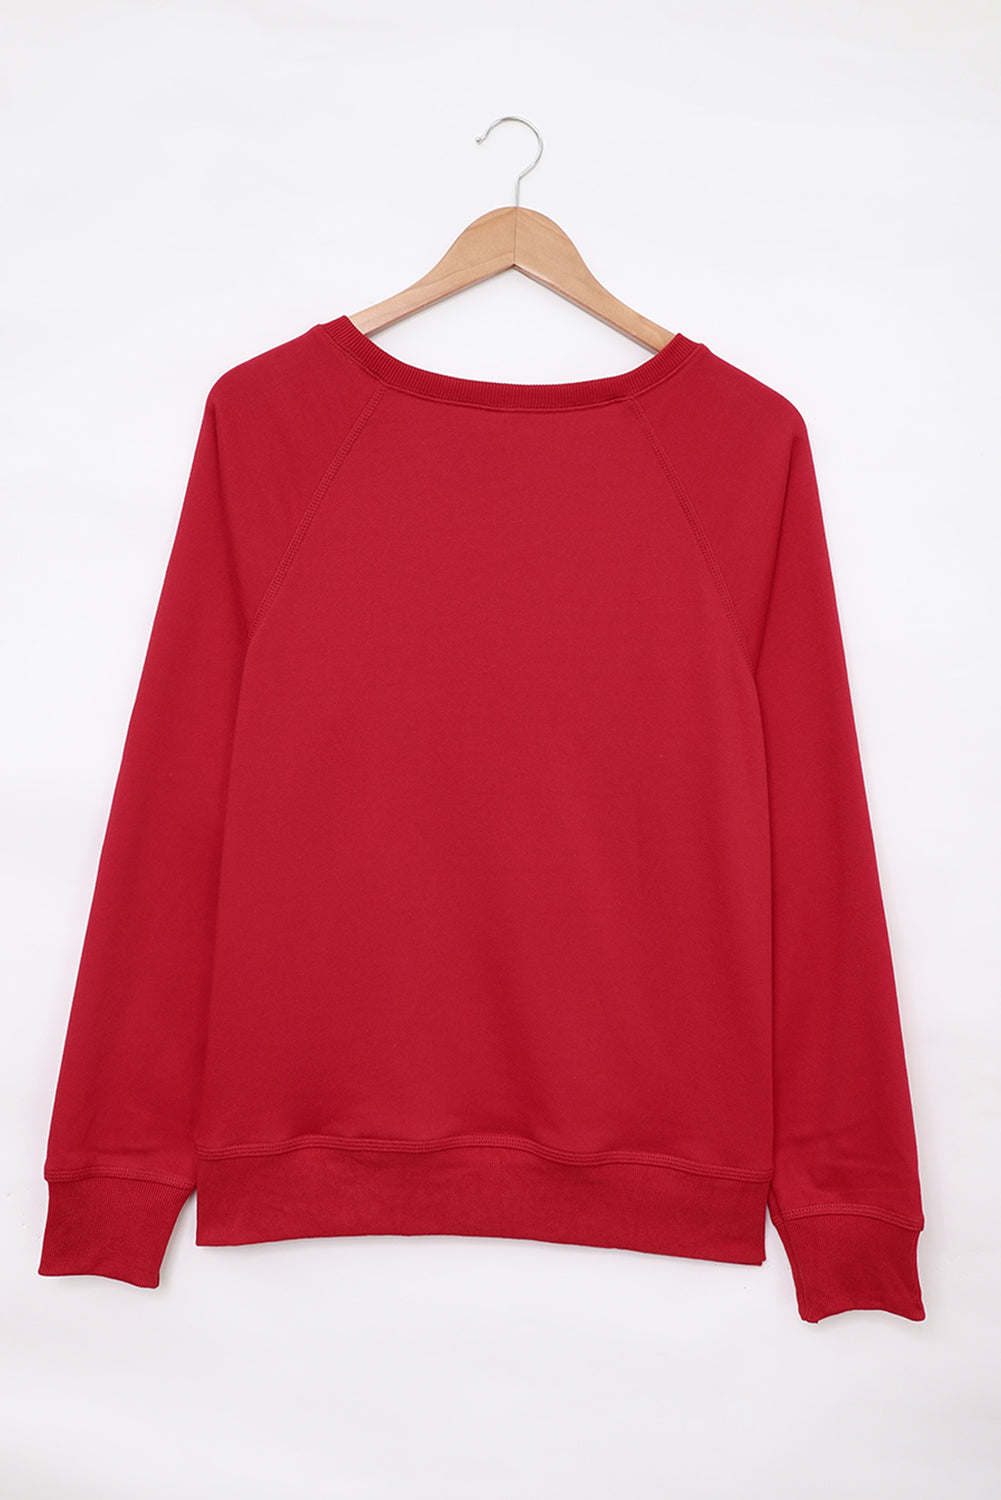 Red Plain Solid Crew Neck Basic Pullover Sweatshirt